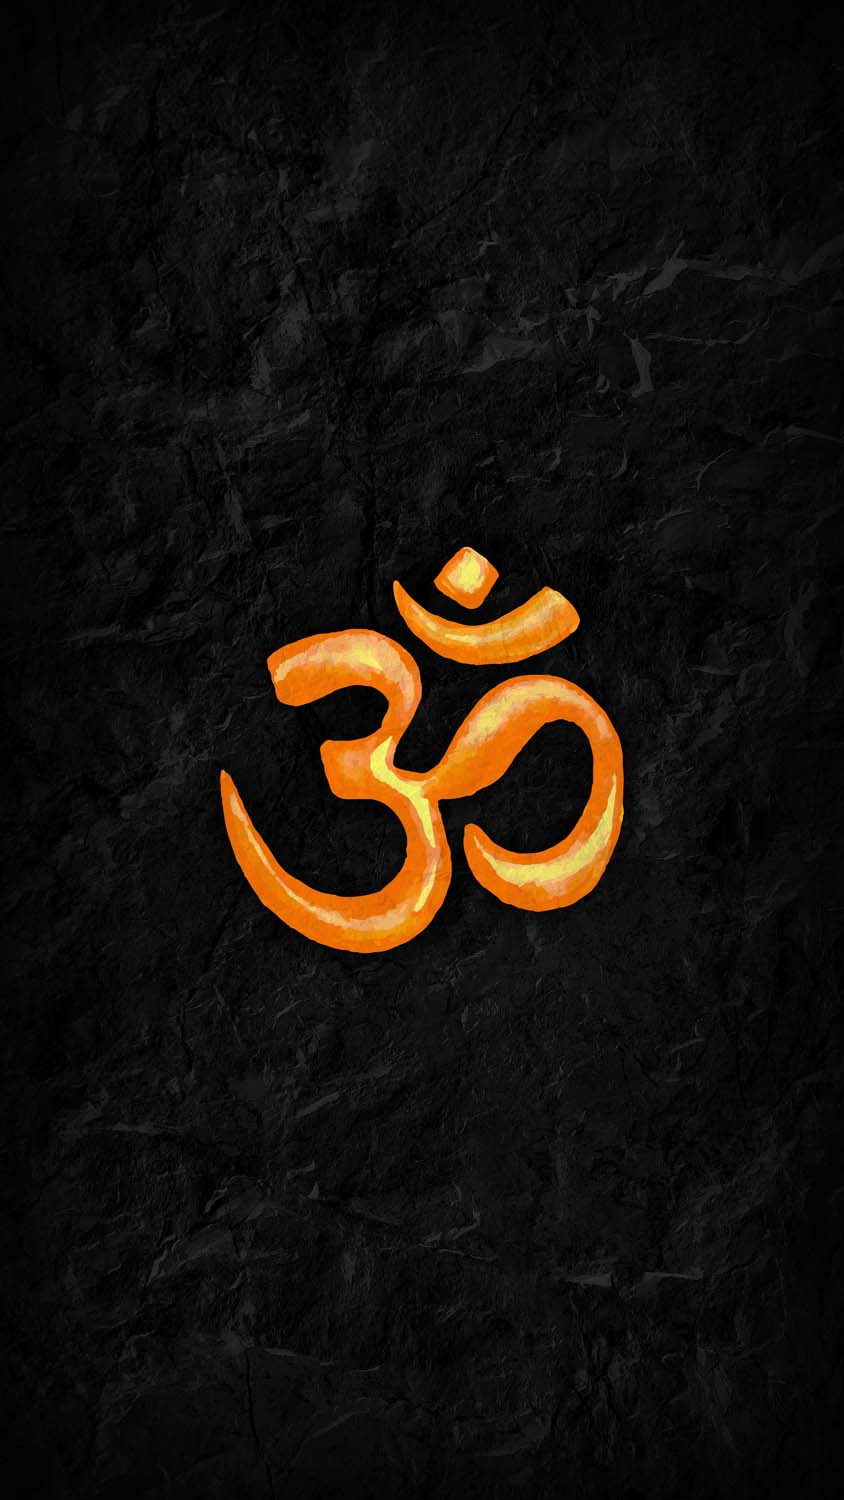 Shiva Hindu Spiritual Sign iPhone Wallpaper 4K  iPhone Wallpapers